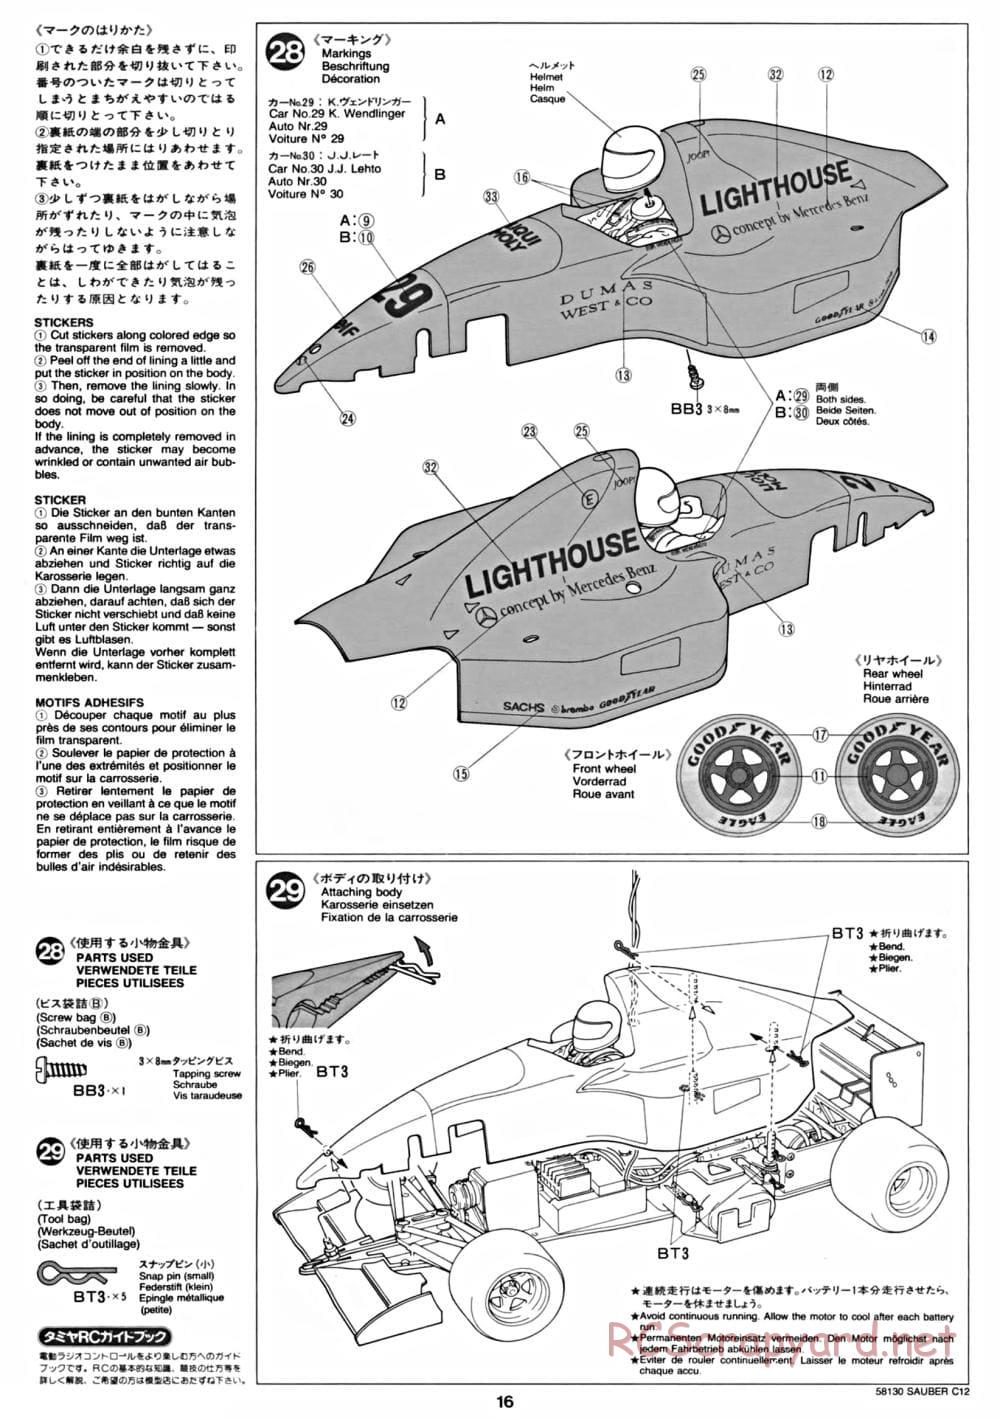 Tamiya - Sauber C12 - F103 Chassis - Manual - Page 16